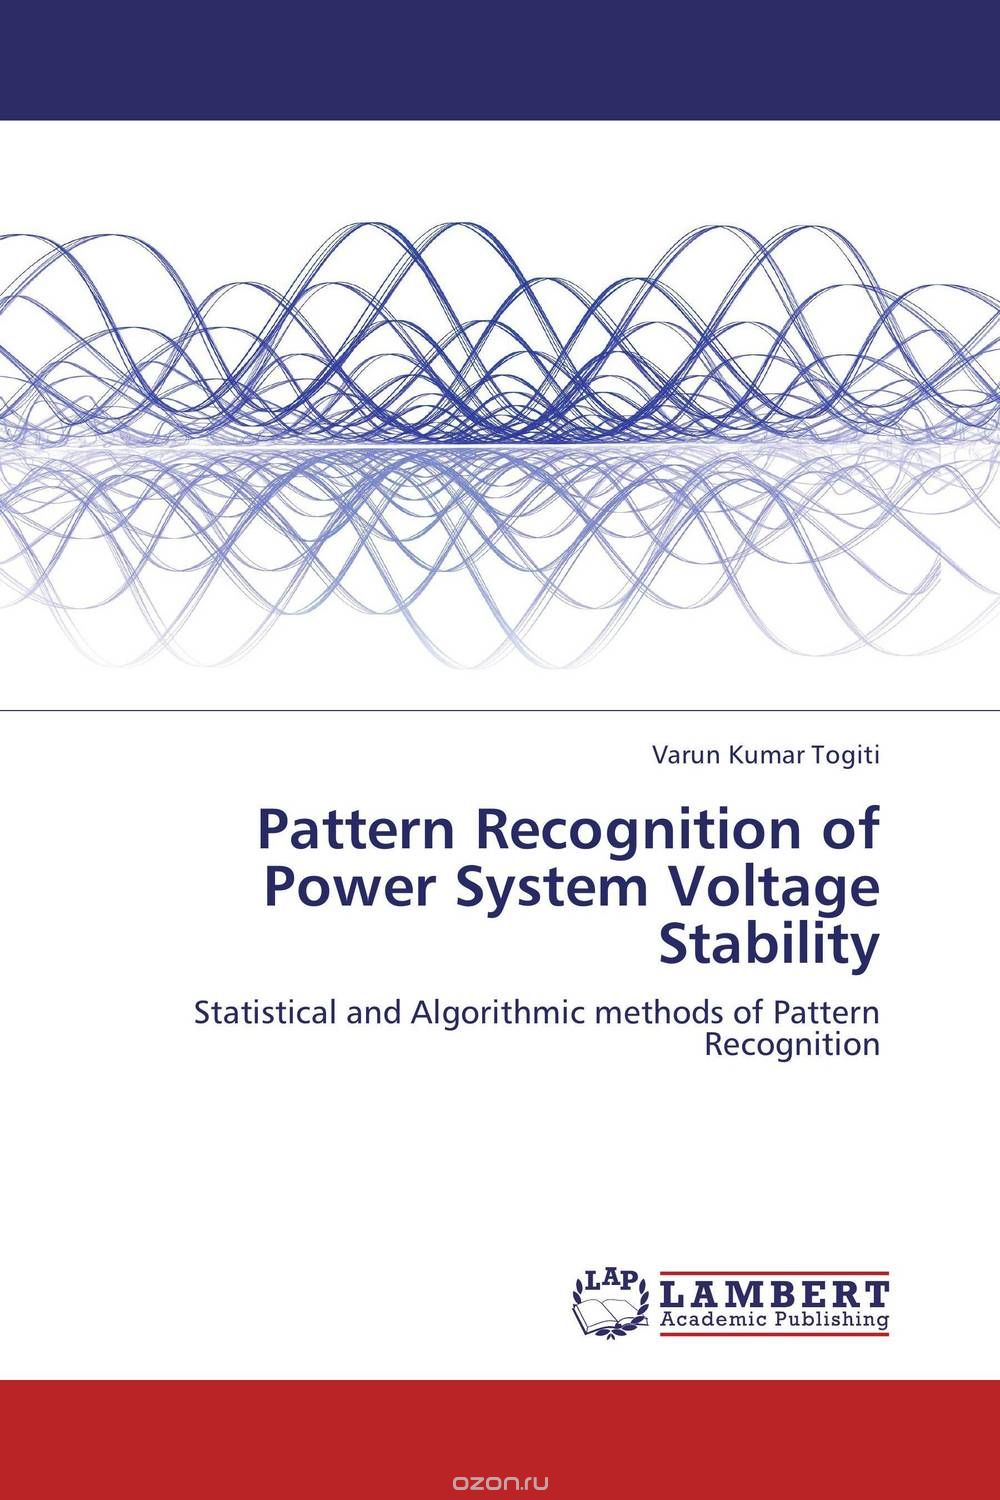 Скачать книгу "Pattern Recognition of Power System Voltage Stability"